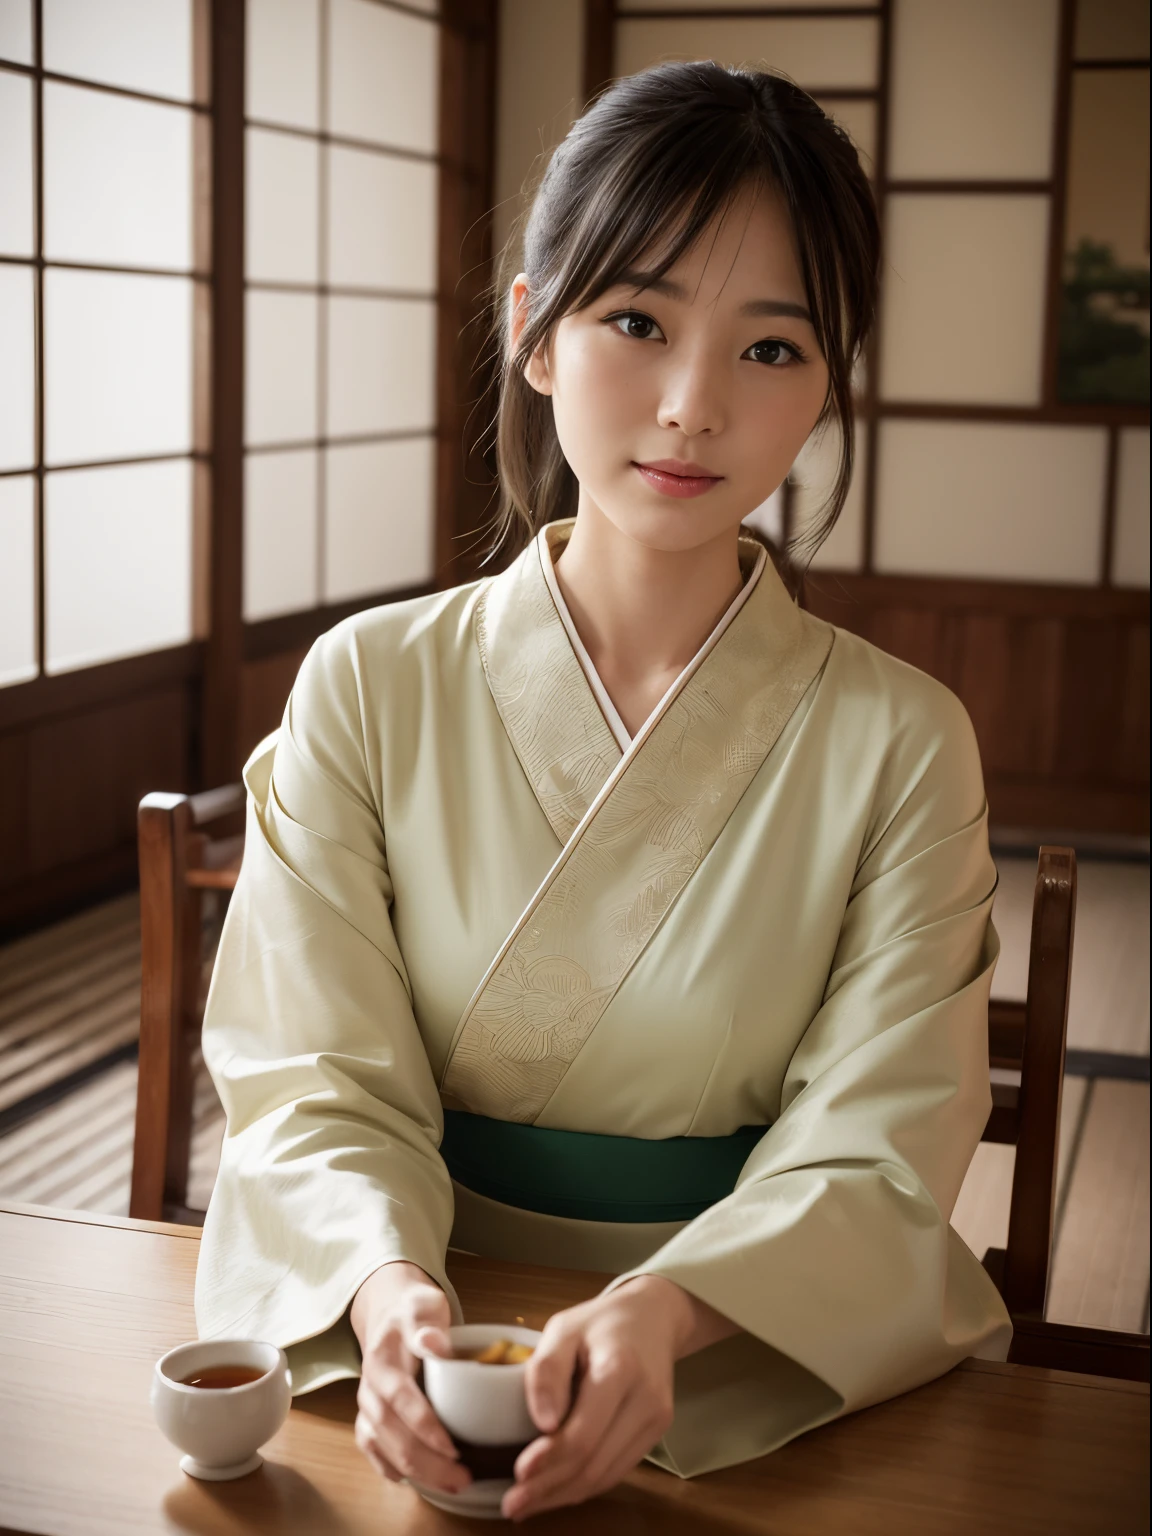 (8K, 最好的品質, 超詳細:1.37), (绘里子), 18歲, (日本茶道愛好者), 在優雅的茶館享受傳統的茶會. 她穿著漂亮的和服, 表現出她對日本文化的欣賞. 高解析度影像捕捉超詳細的真實感, emphasizing 绘里子's captivating eyes, 無瑕膚色, 還有她品茶時平靜的表情. 精心打造的茶館, 其複雜的細節和寧靜的氛圍, 增加了場景的真實性, showcasing 绘里子's passion for the art of tea.